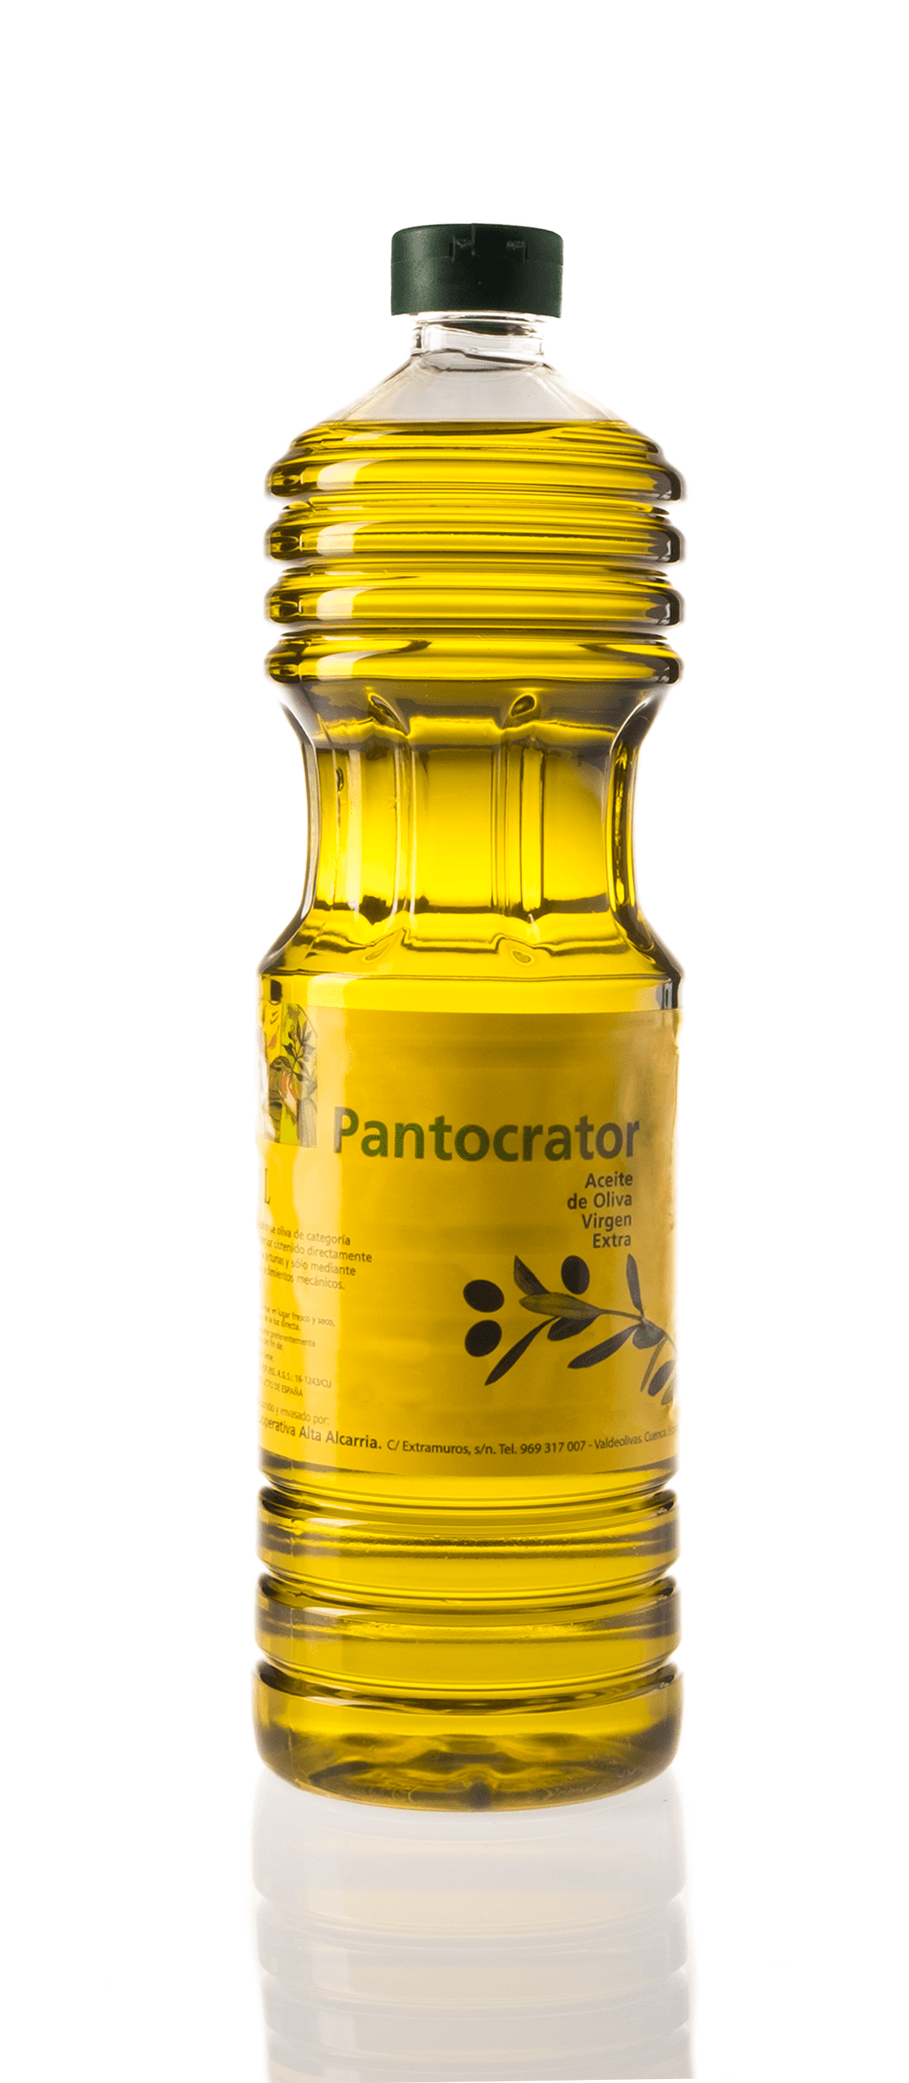 Pantocrator 1l